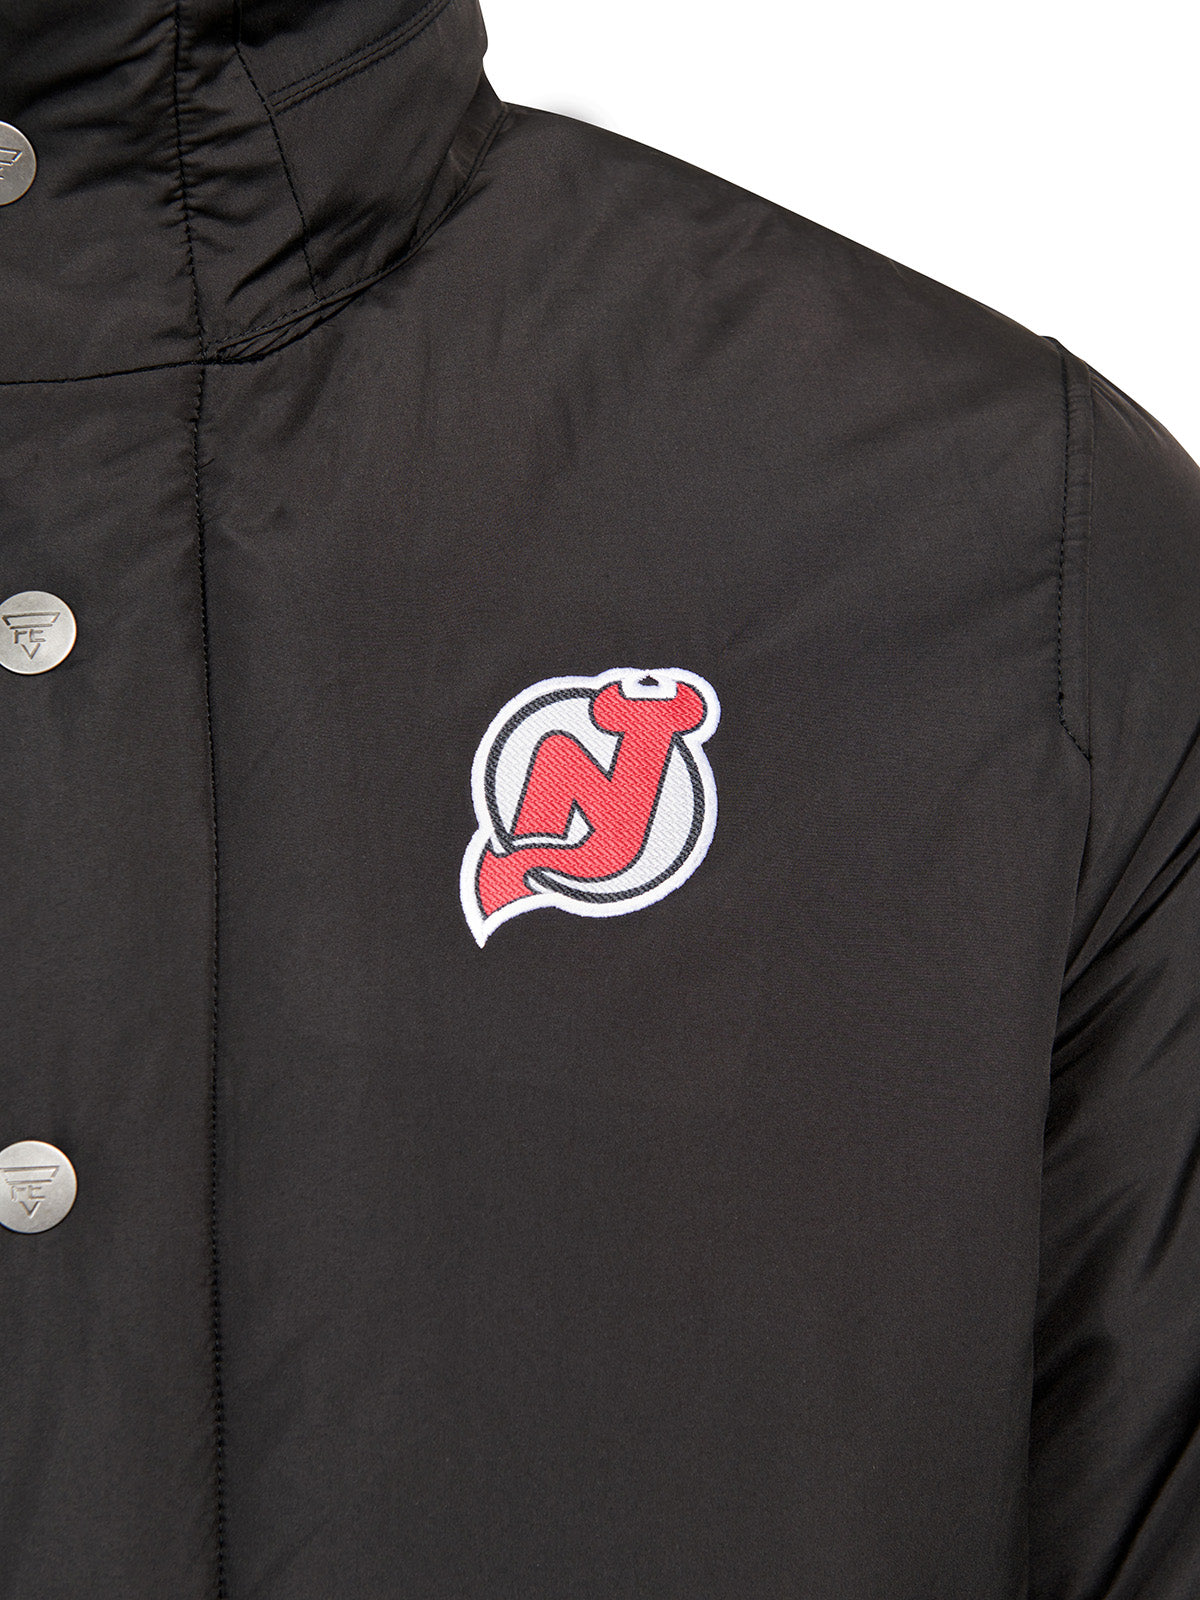 New Jersey Devils Coach's Jacket